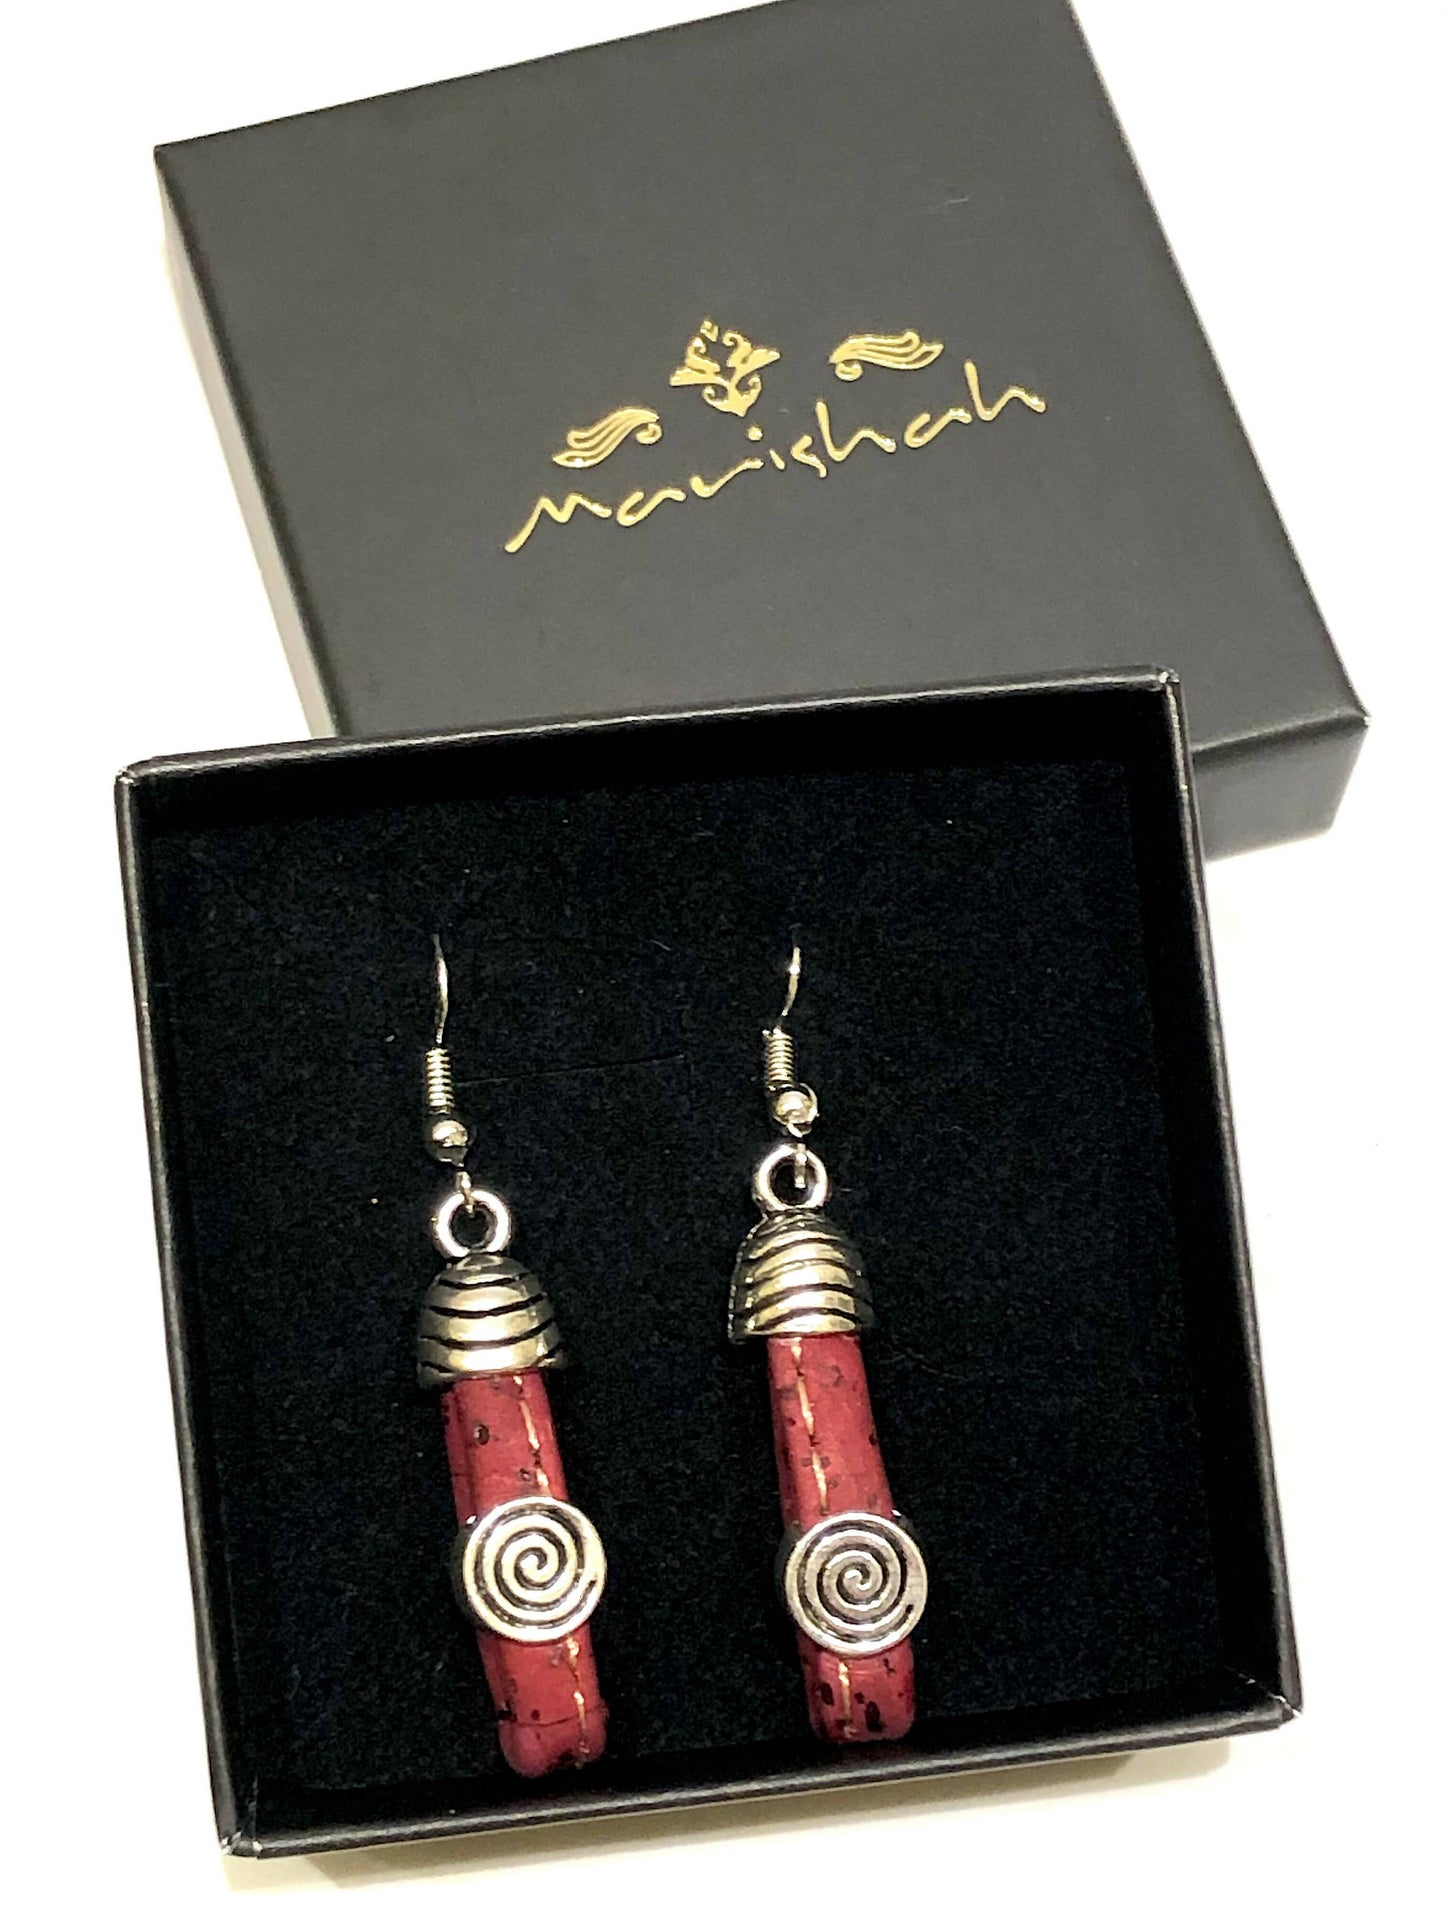 Cork earrings, vegan, sustainable source, silver plated ear-wires. Handmade